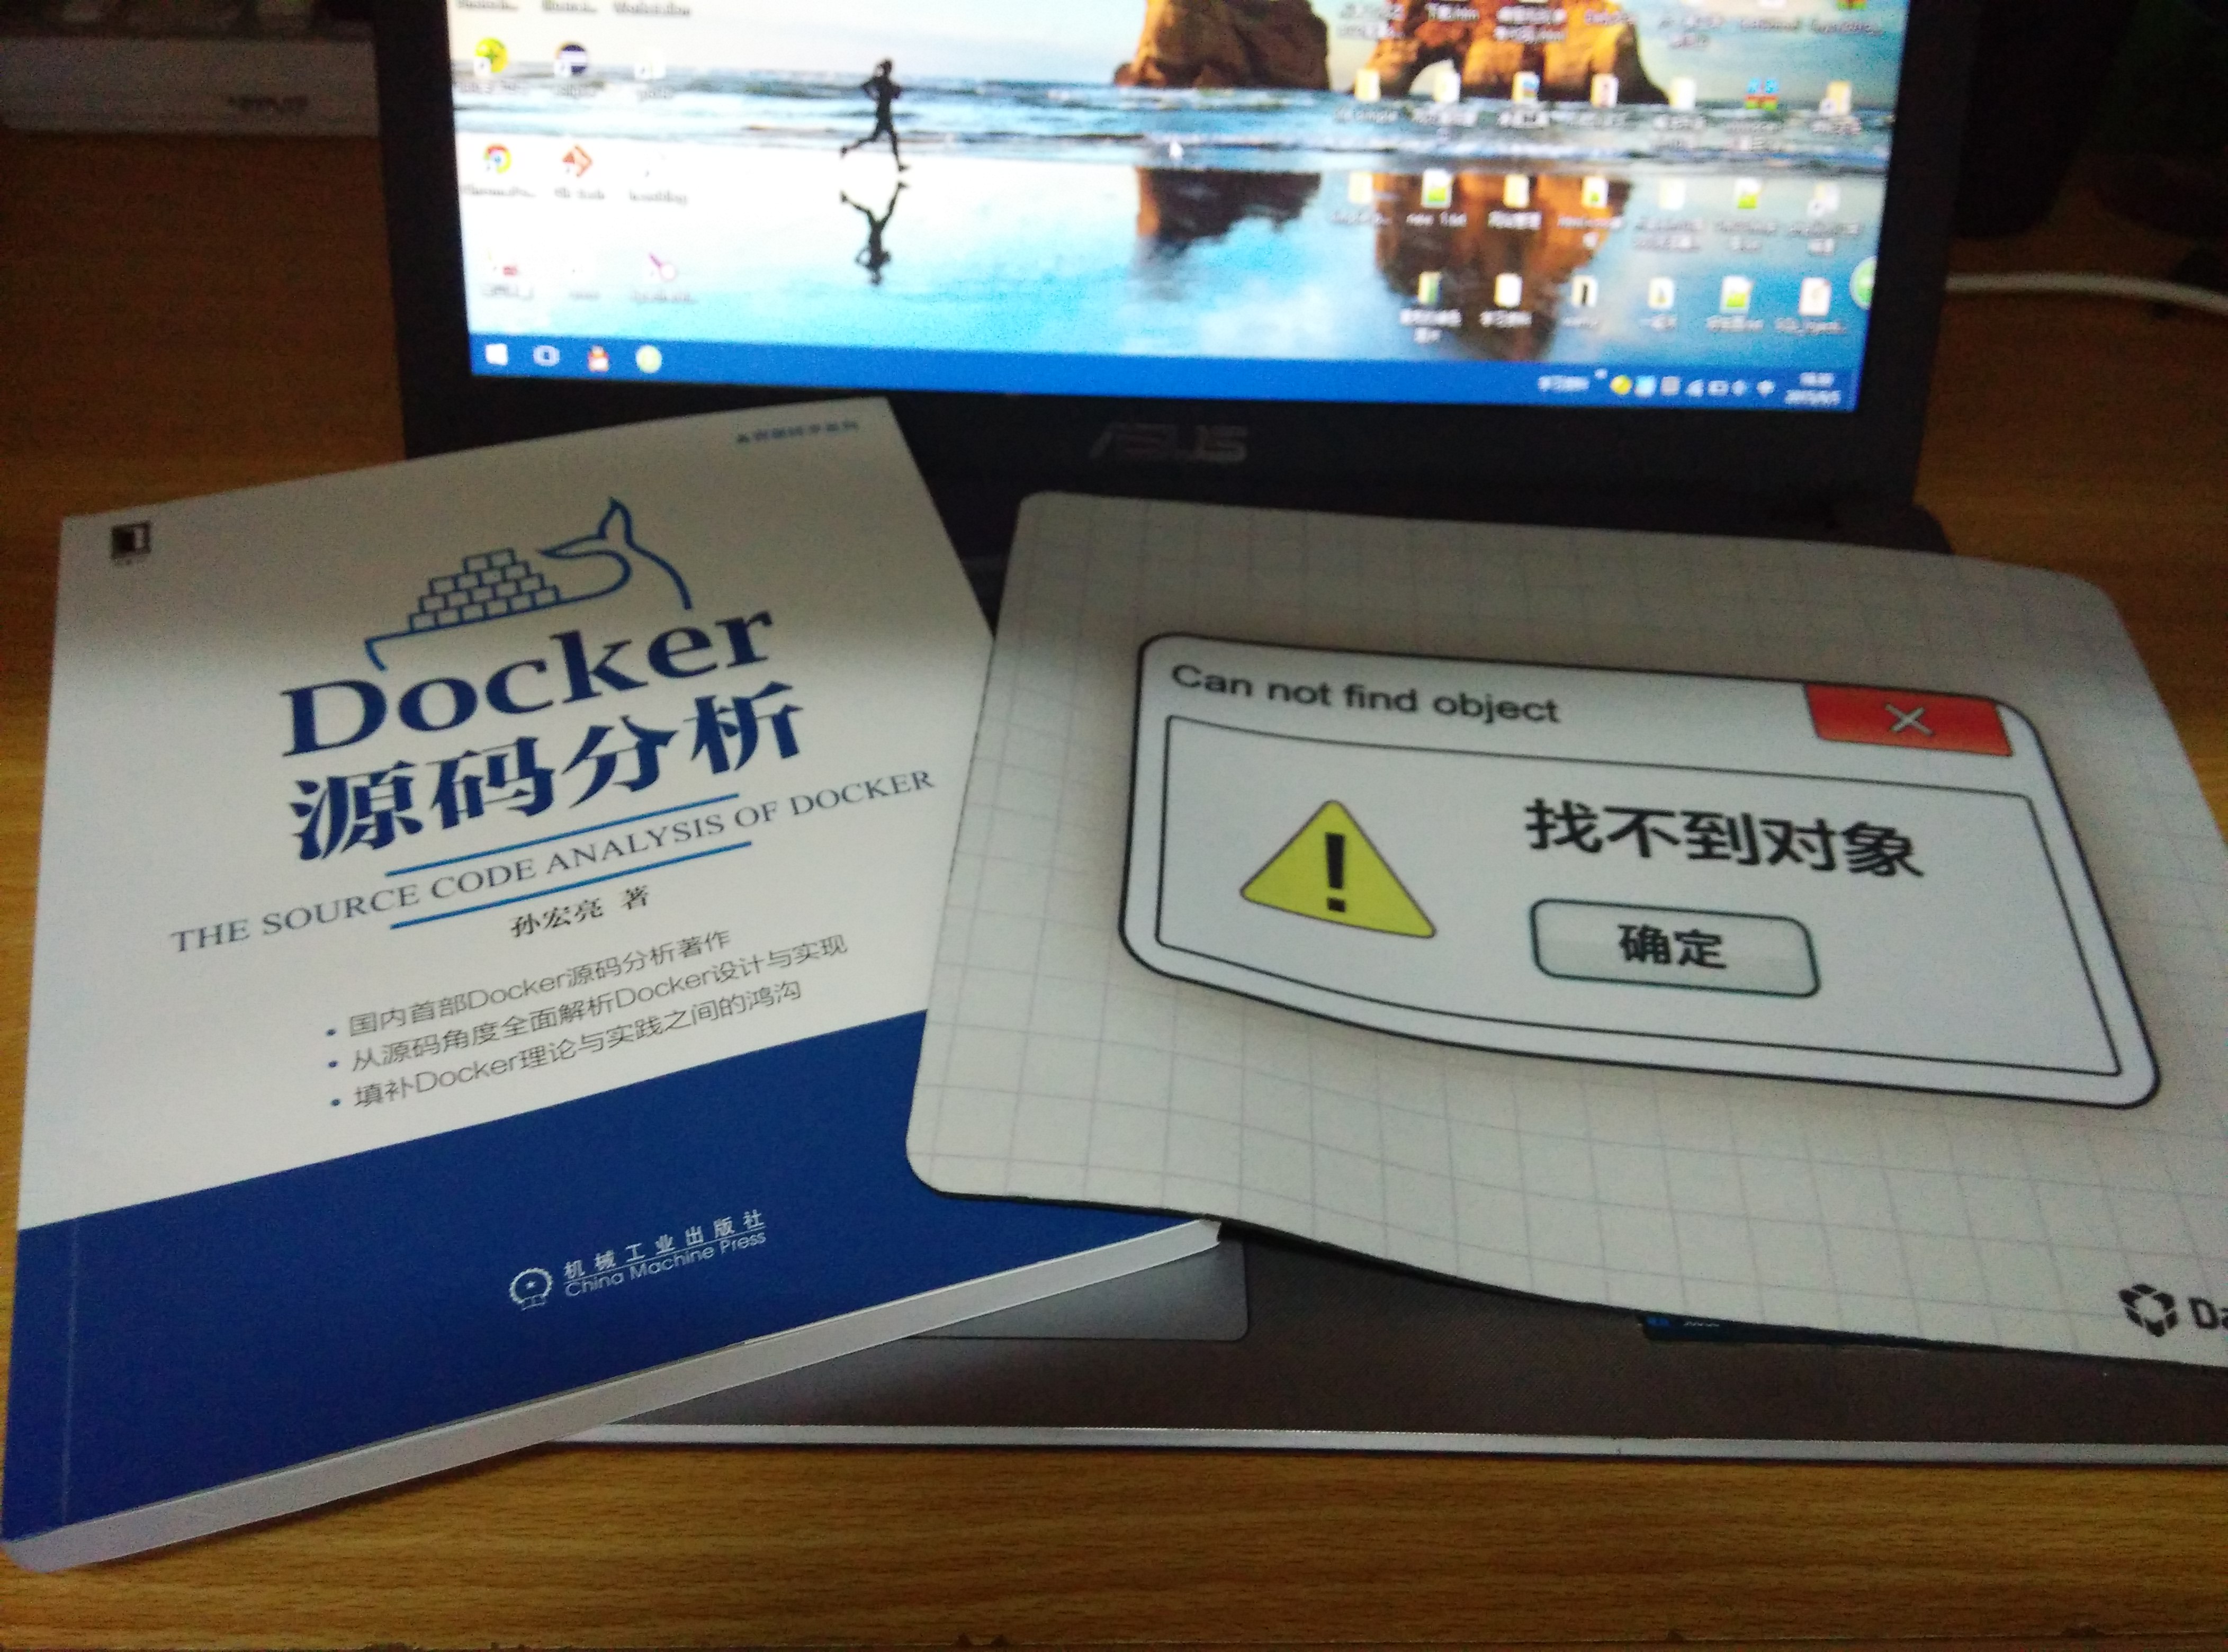 《docker源码分析》和鼠标垫